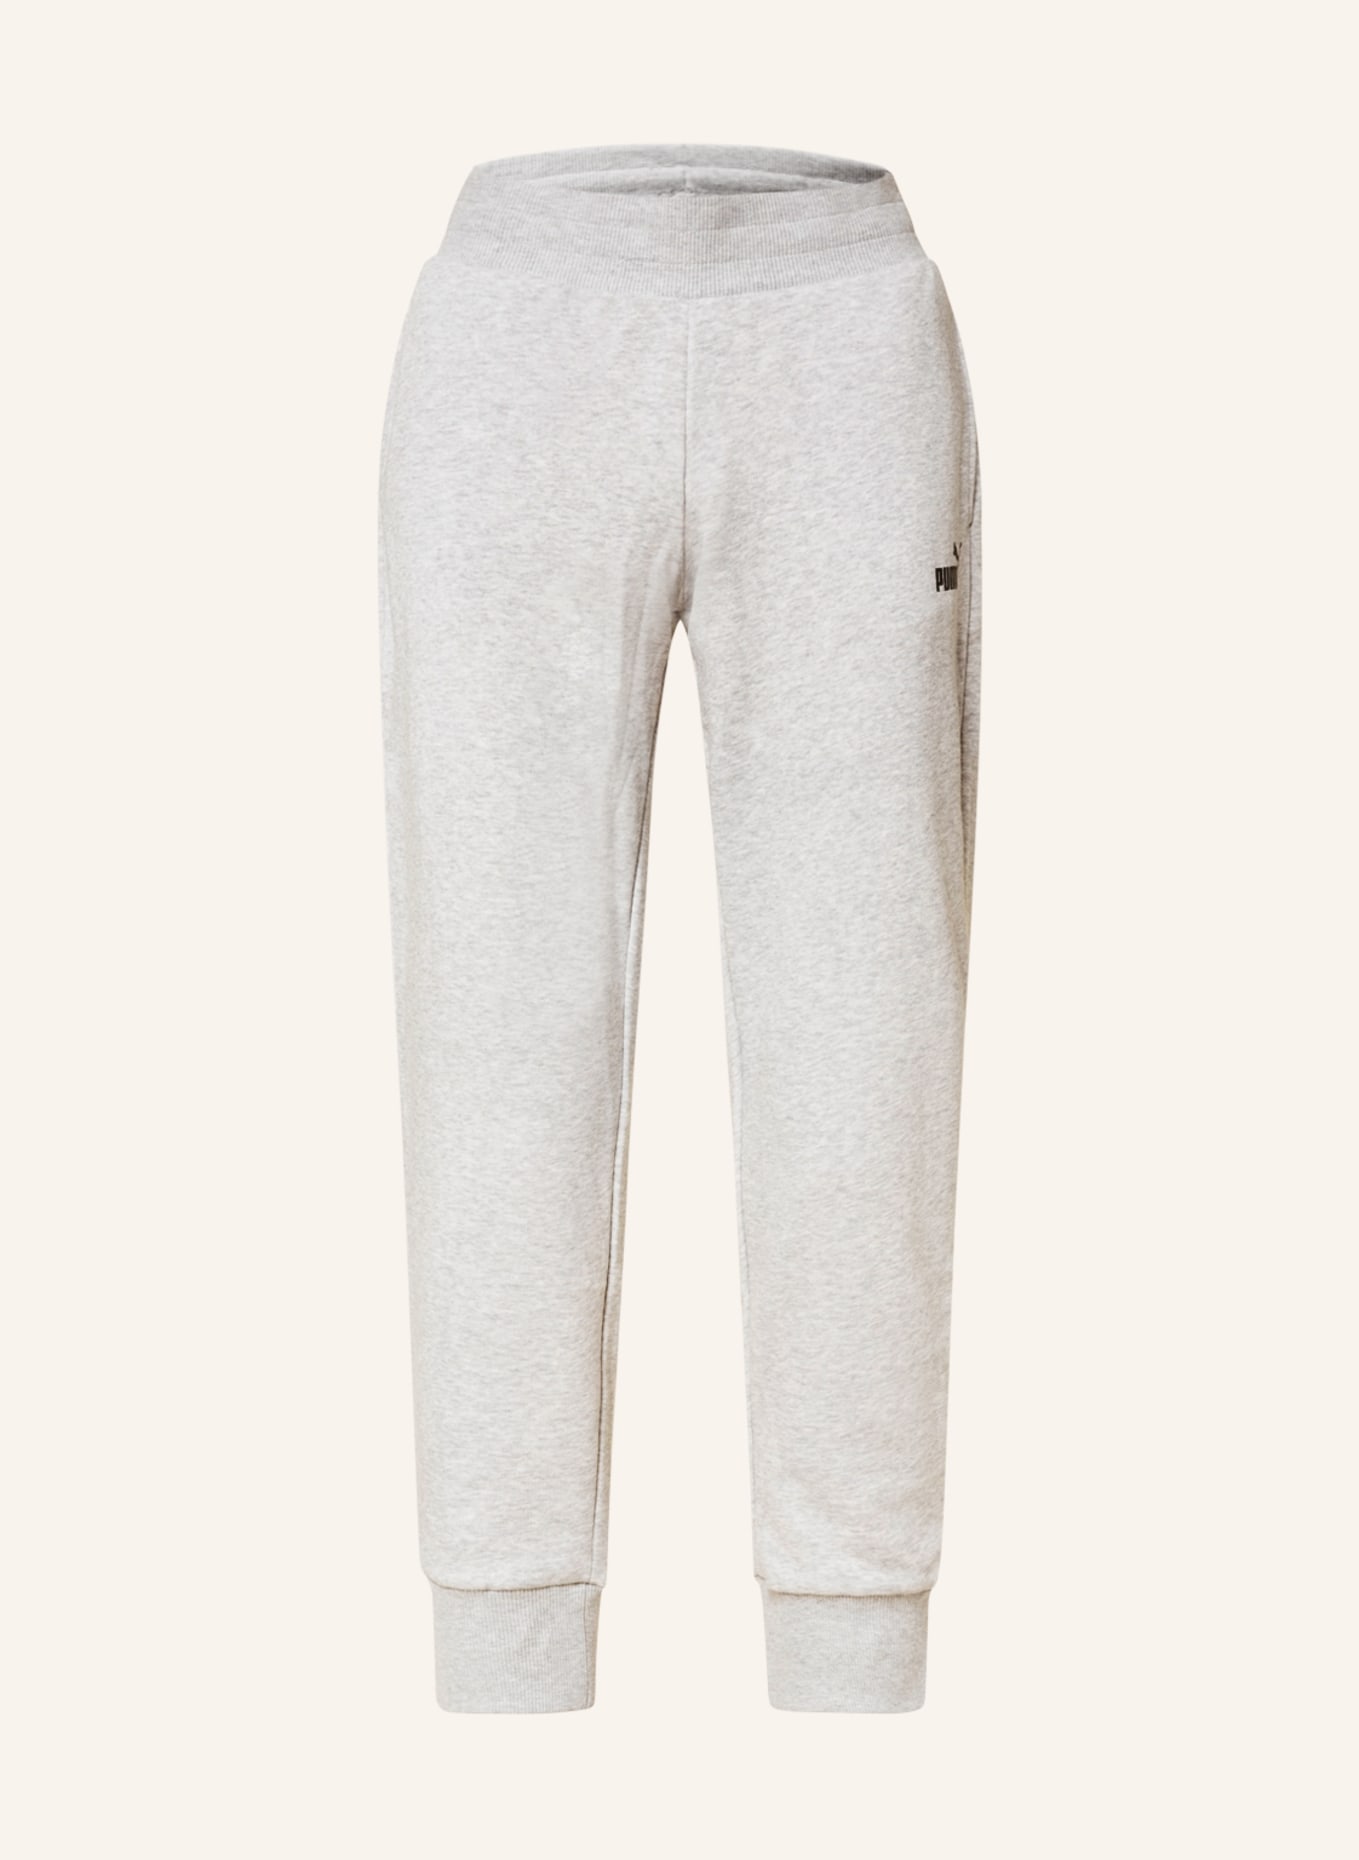 PUMA Sweatpants ESSENTIALS in light gray